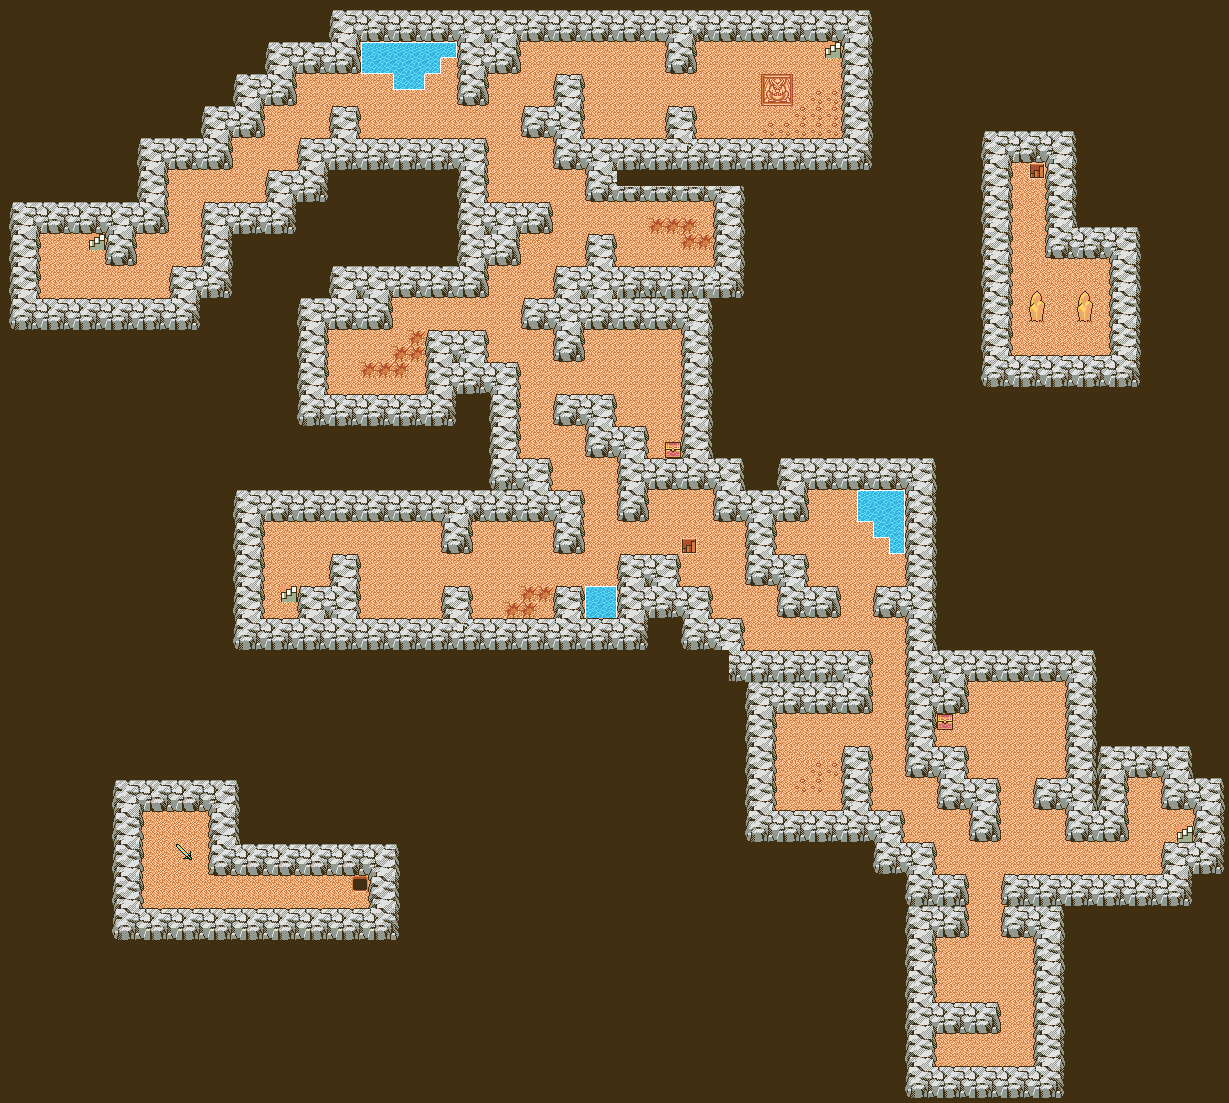 Gbc版ドラゴンクエスト1 2攻略 ロンダルキアの洞窟 Game Maps ゲームマップ